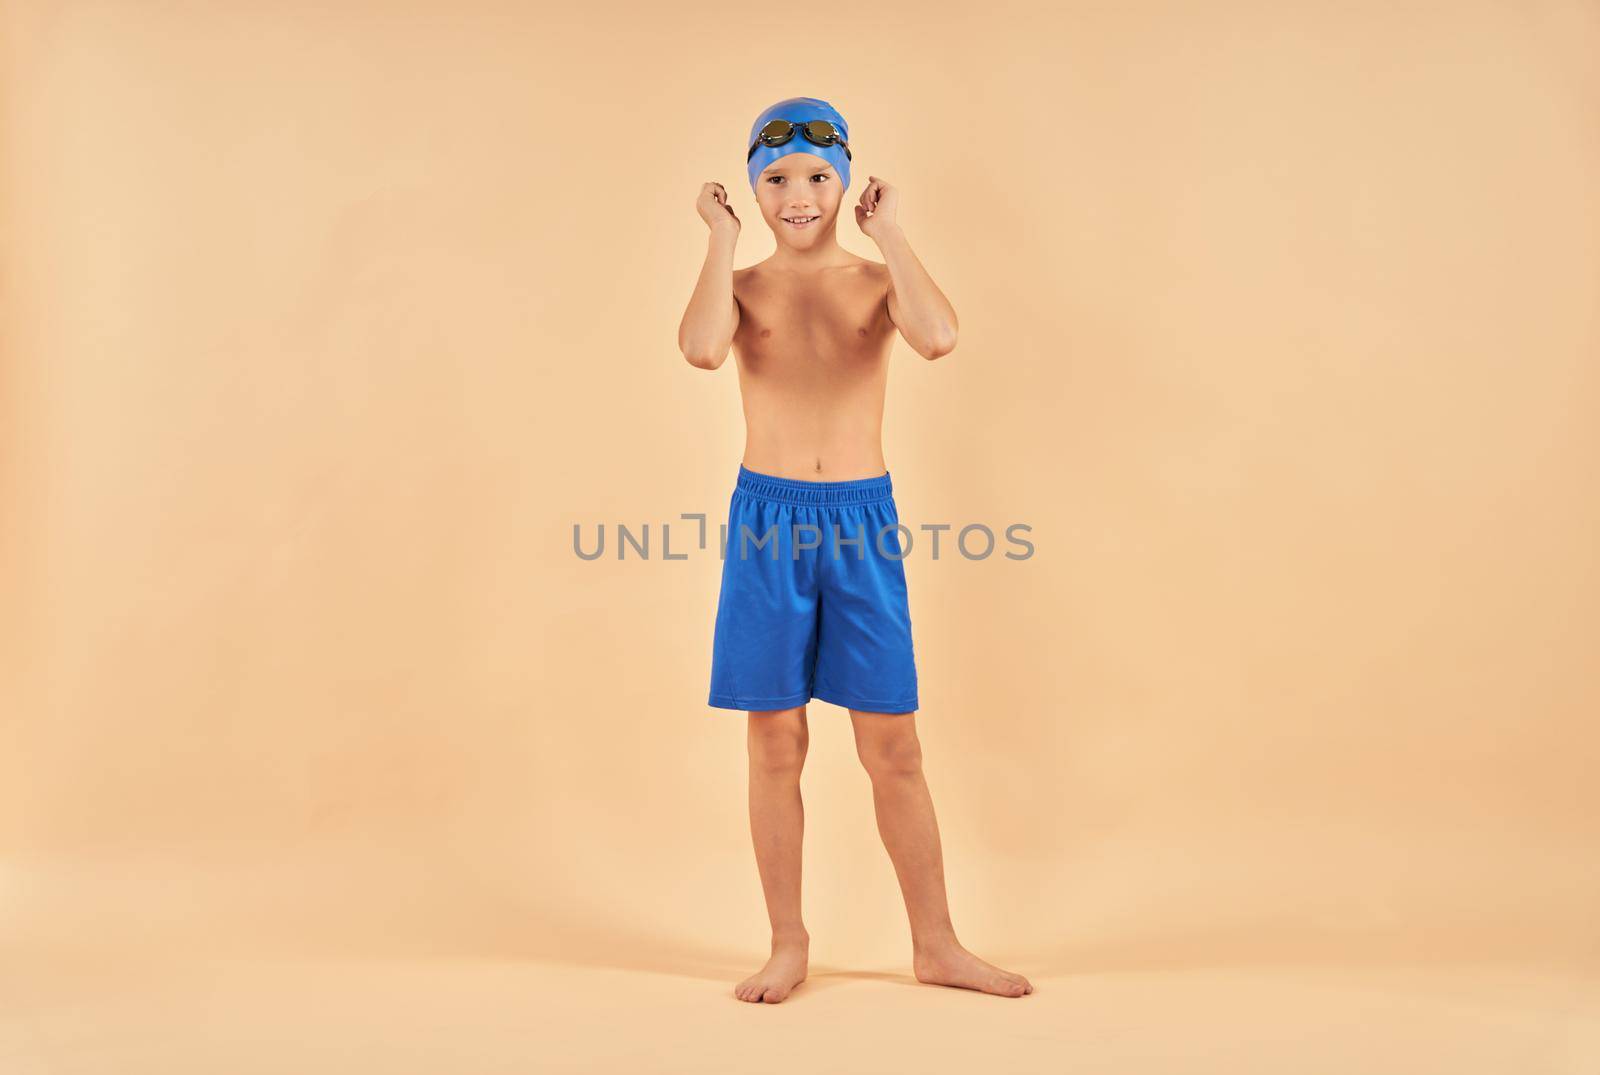 Cute boy swimmer standing against light orange background by friendsstock